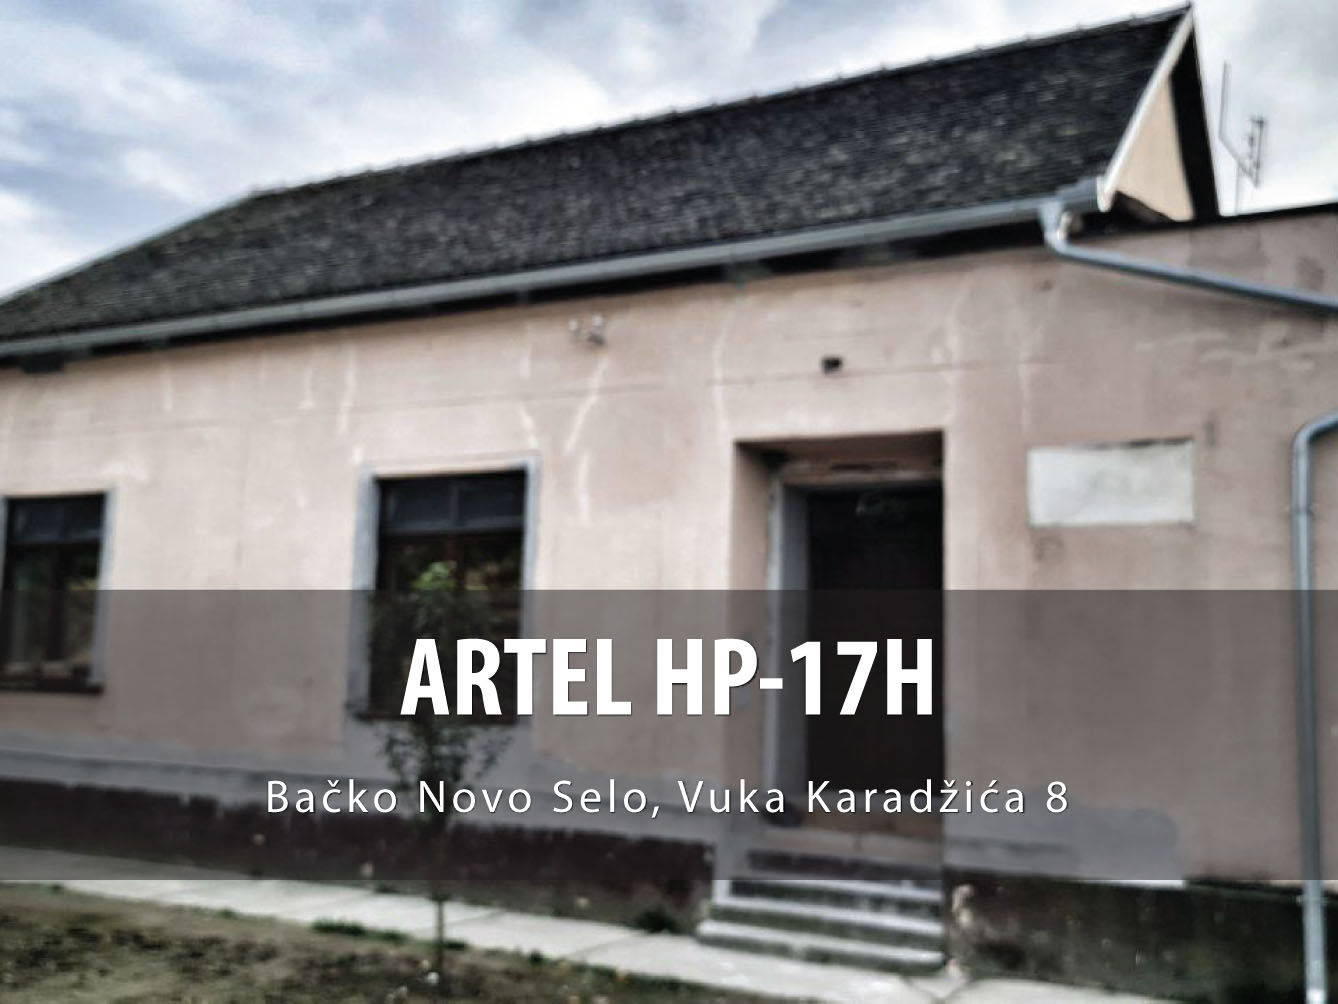 Backo Novo Selo ARTEL HP-17H